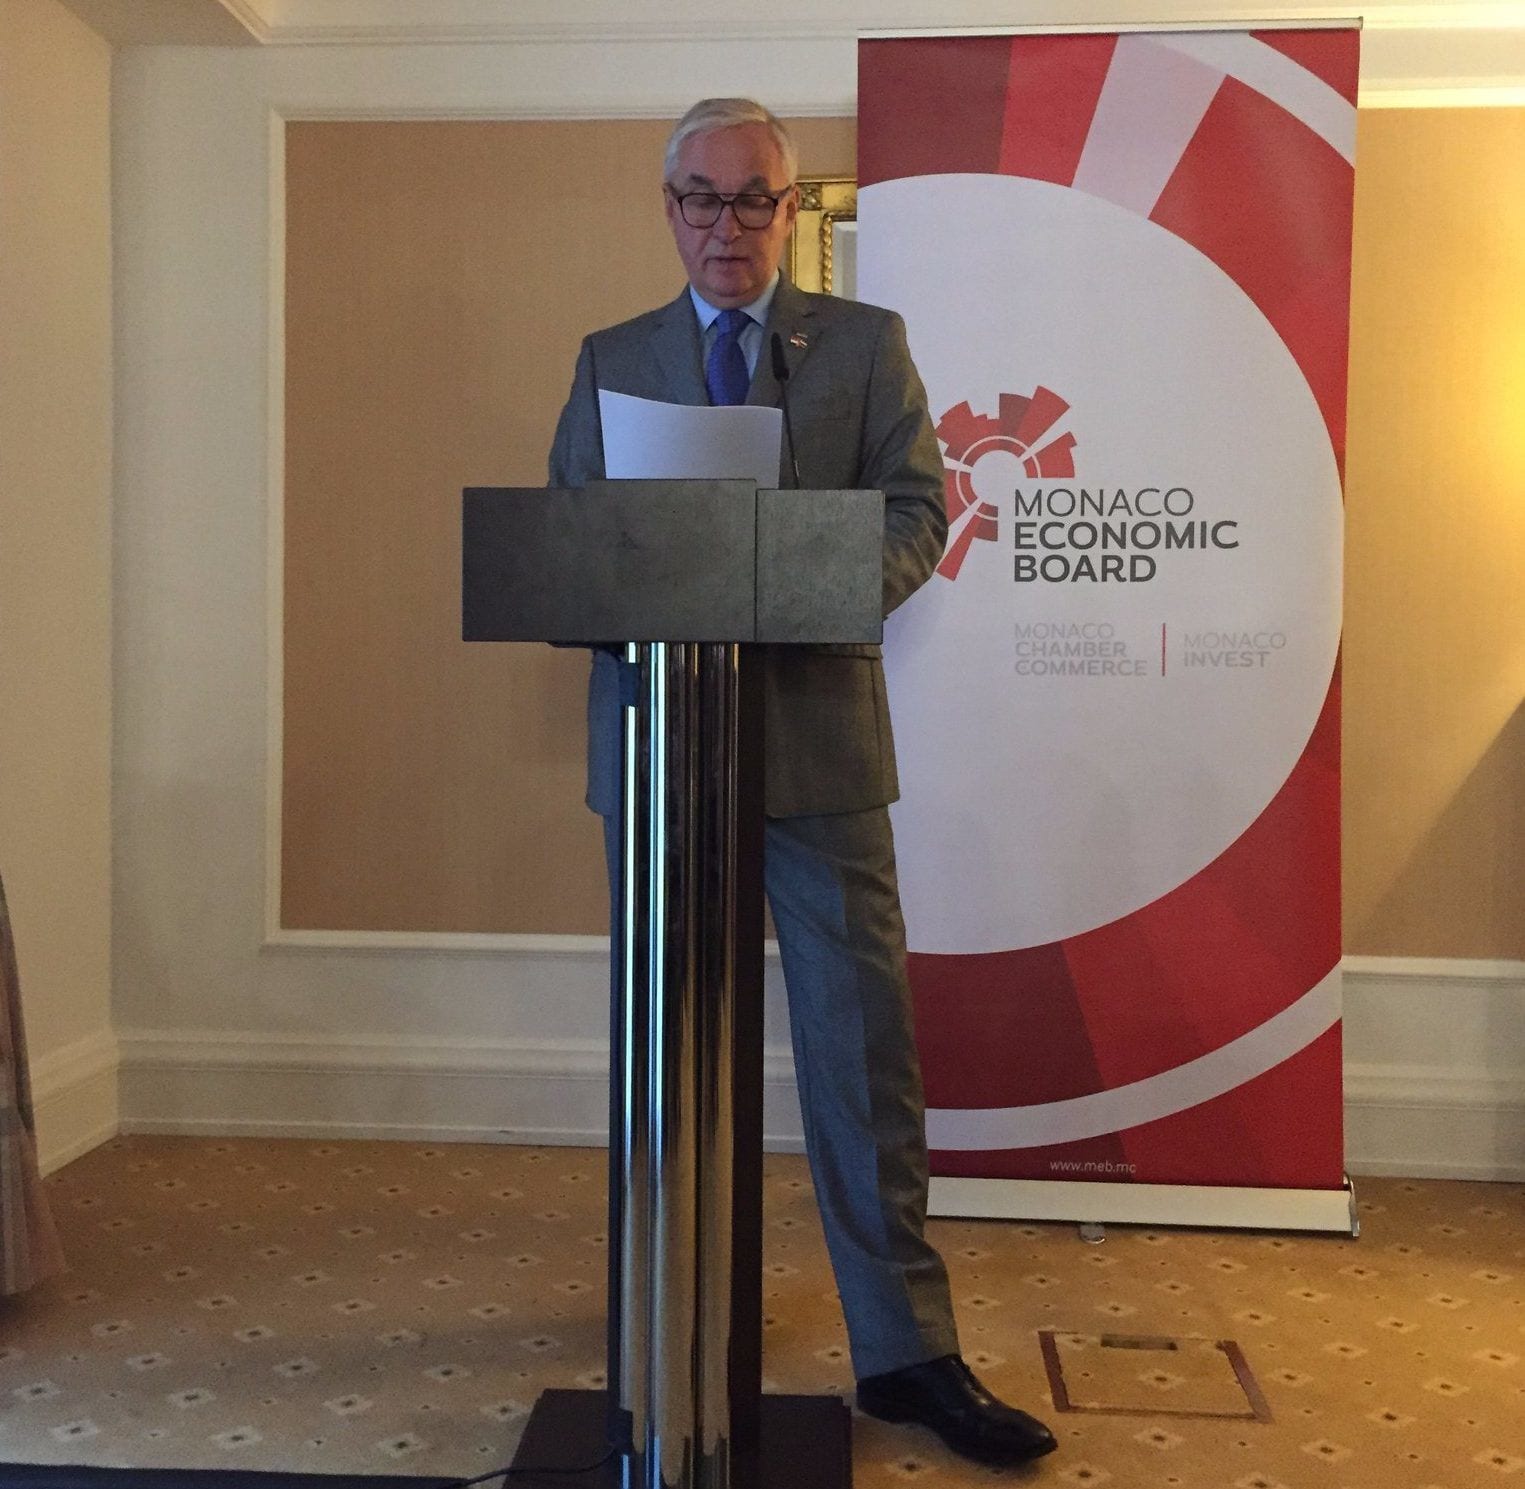 MEB in Moscow presentation by the Consul of Monaco in Russia, Igor Yurgens. Photo: Twitter MonacoEconomicBoard